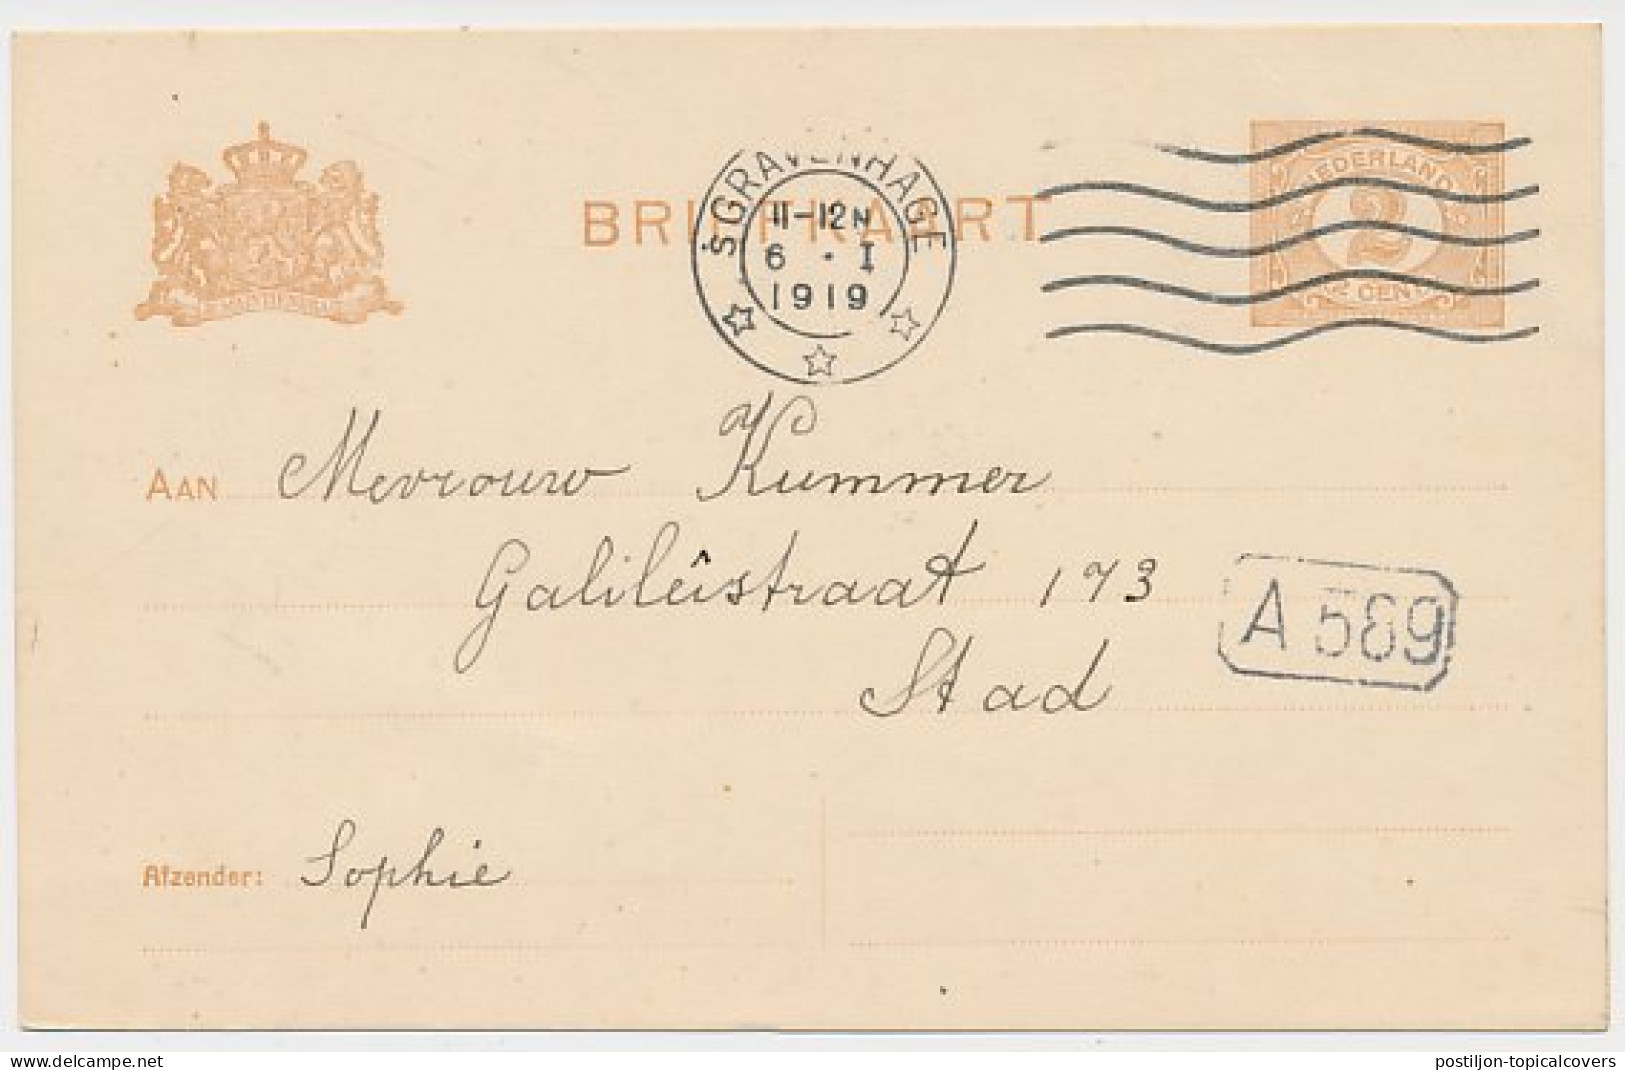 Briefkaart G. 88 A II Locaal Te S Gravenhage 1919 - Ganzsachen